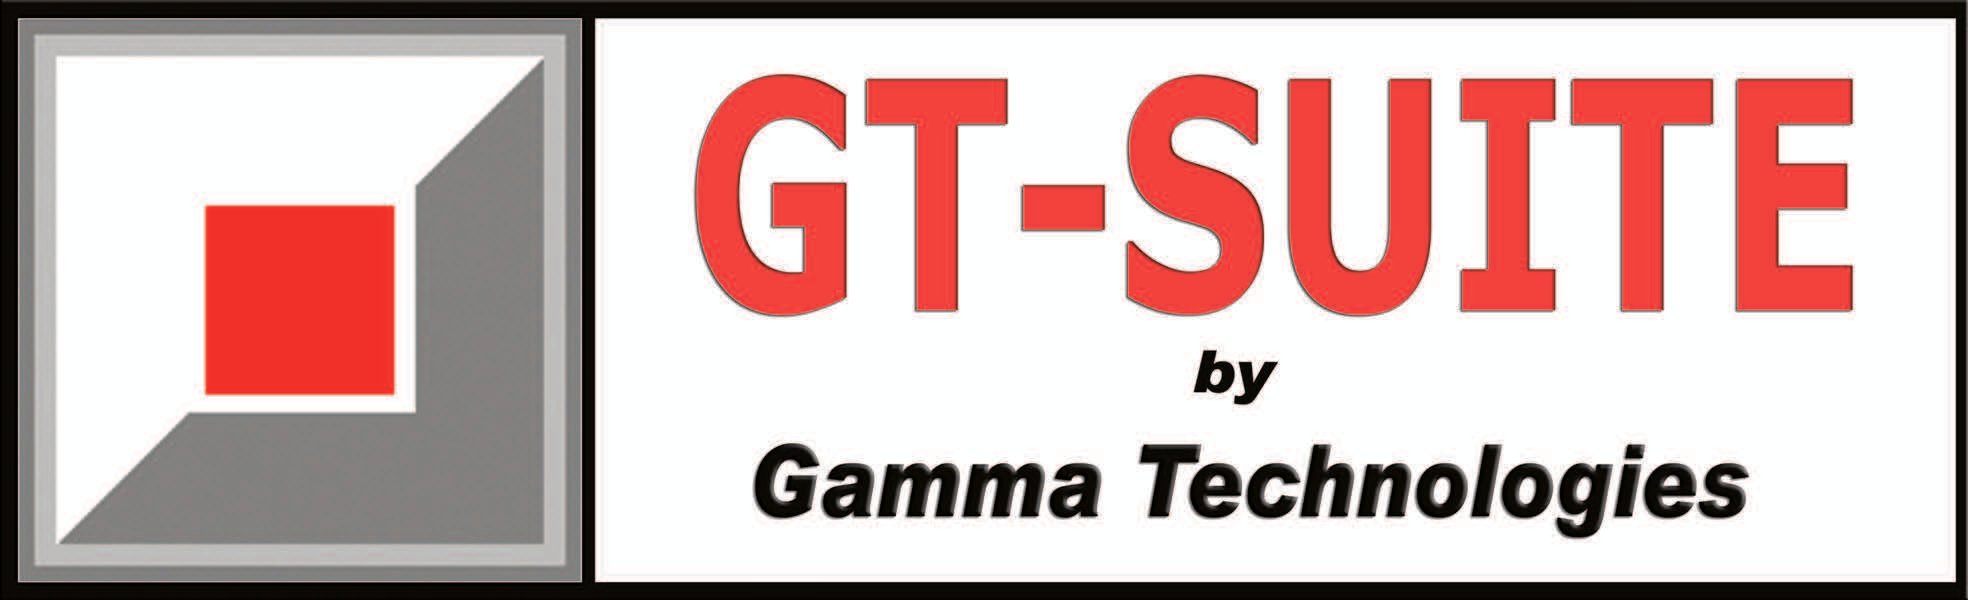 Gamma Technologies logo